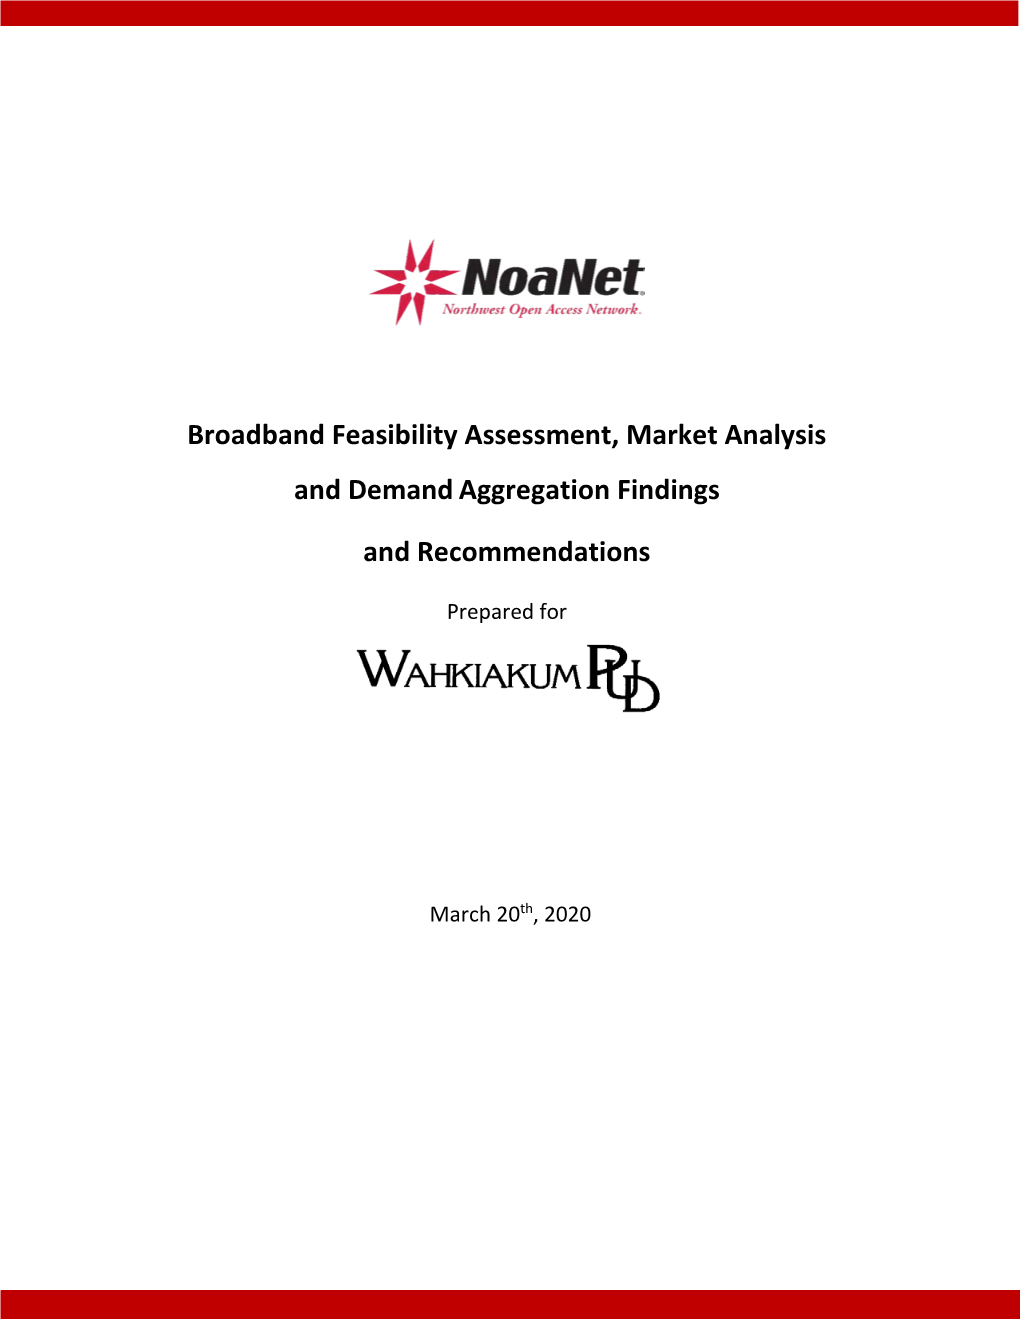 Wahkiakum Broadband Feasibility Assessment